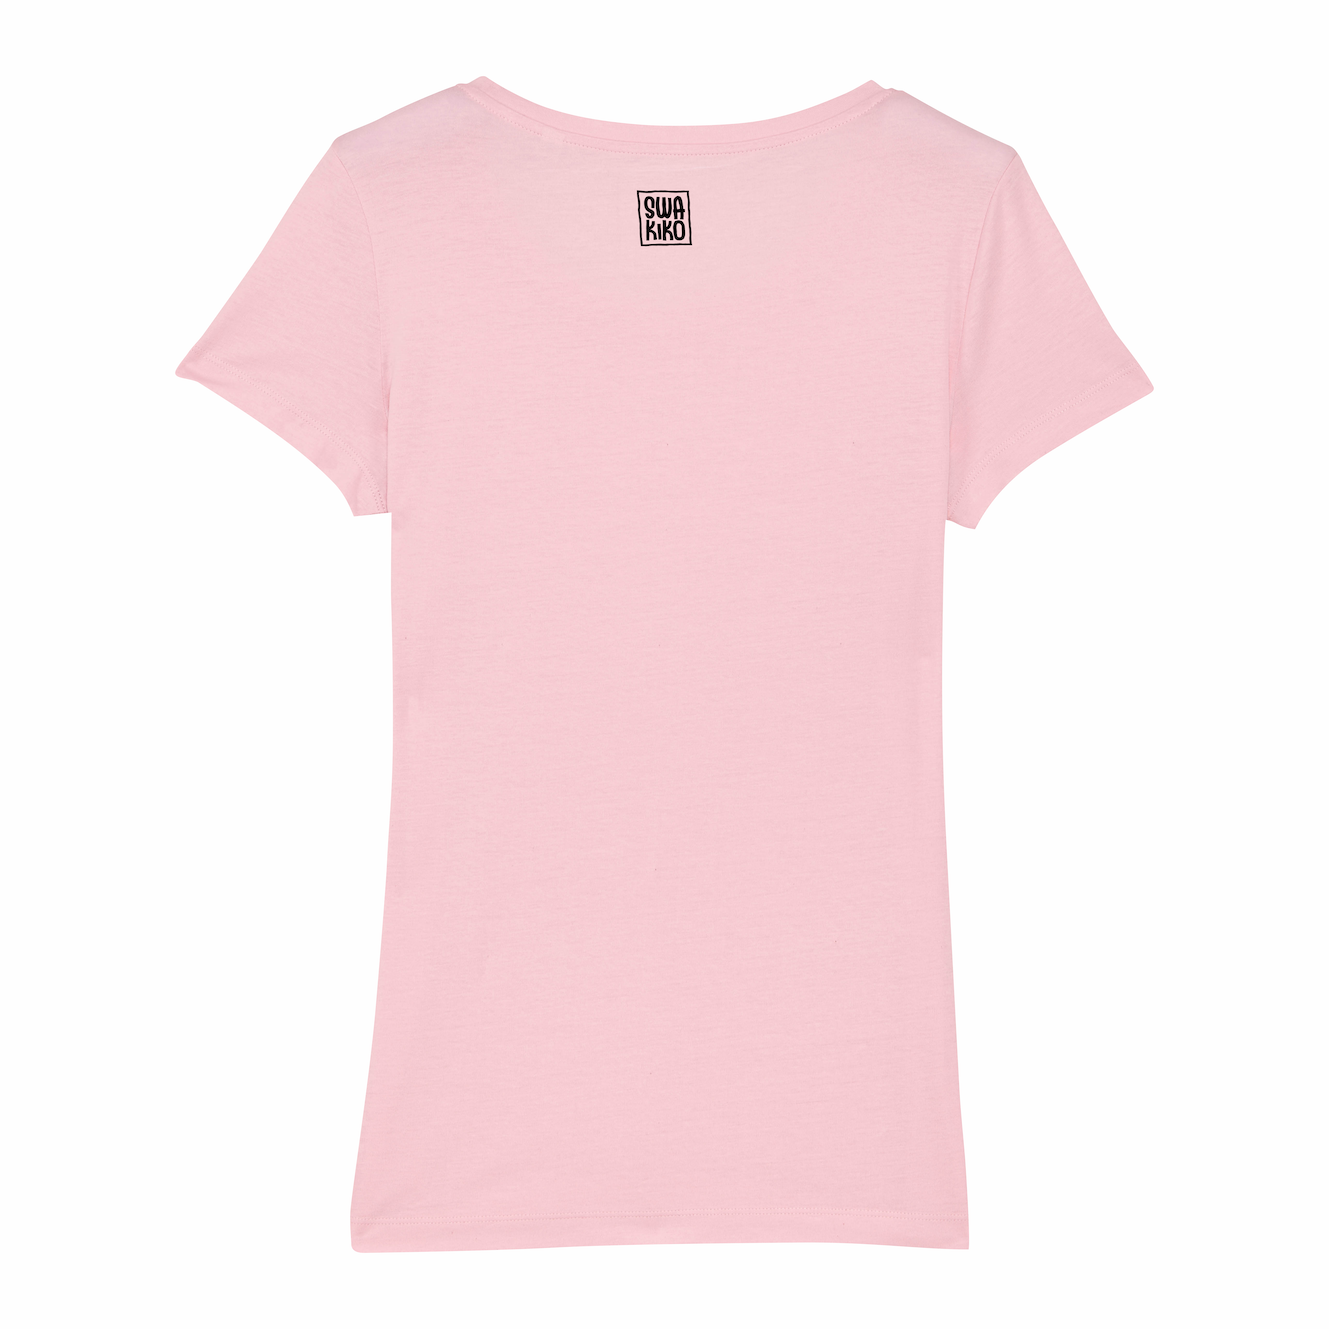 SWAKiKO logo, T-shirt women pink